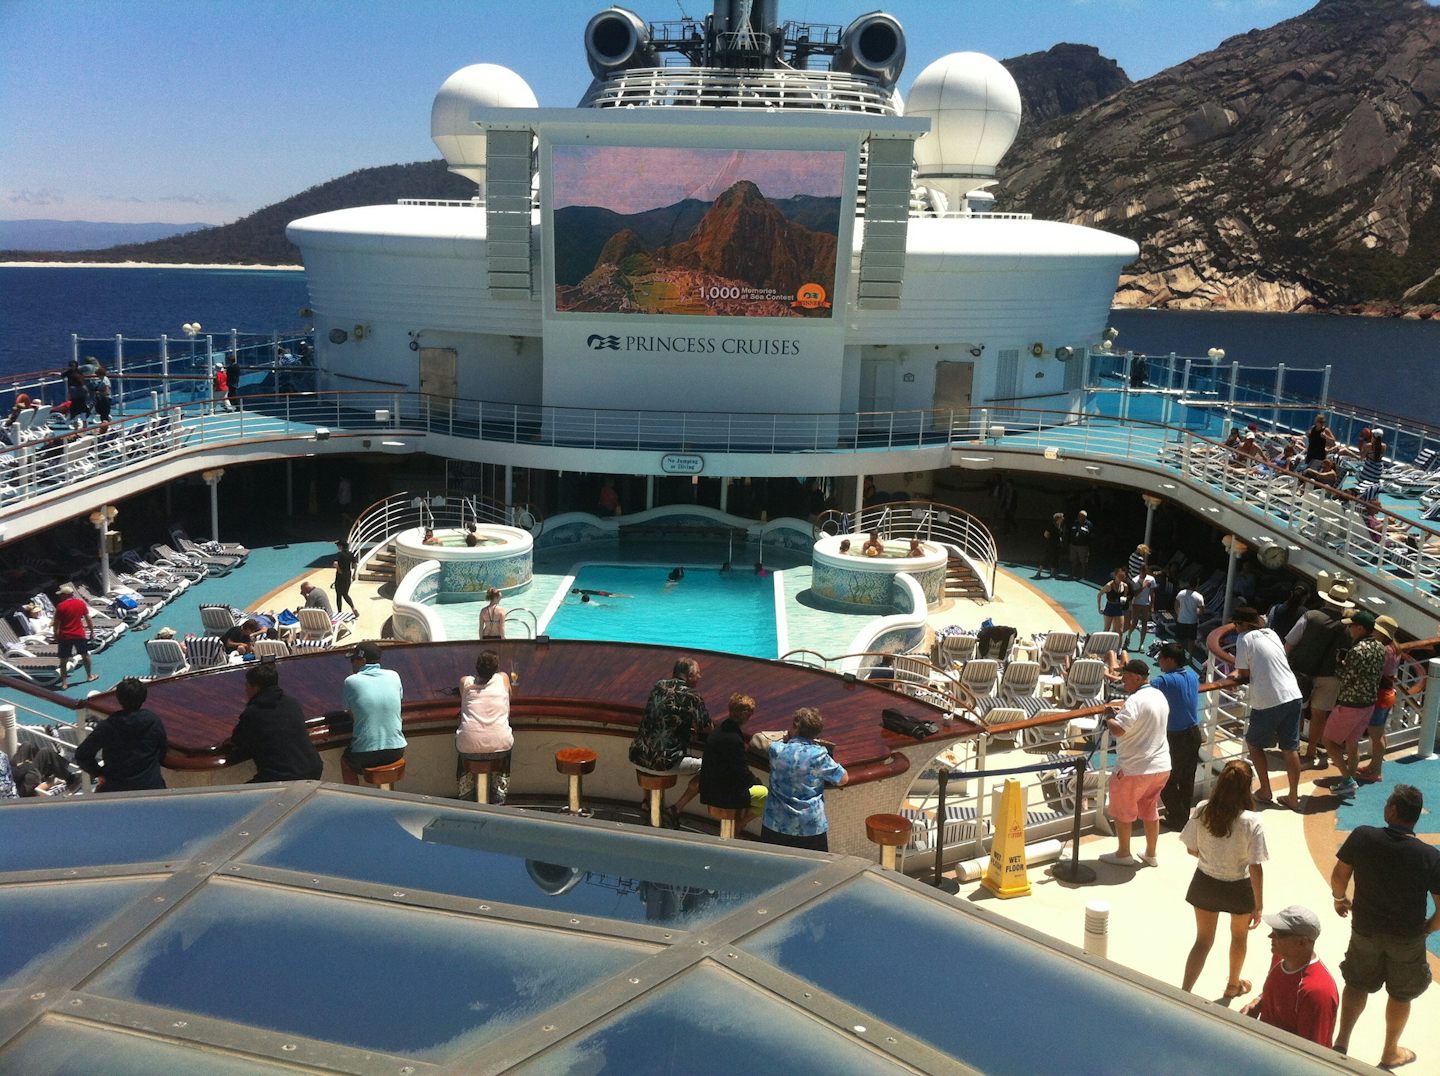 Scenic cruising , on deck enjoying the view